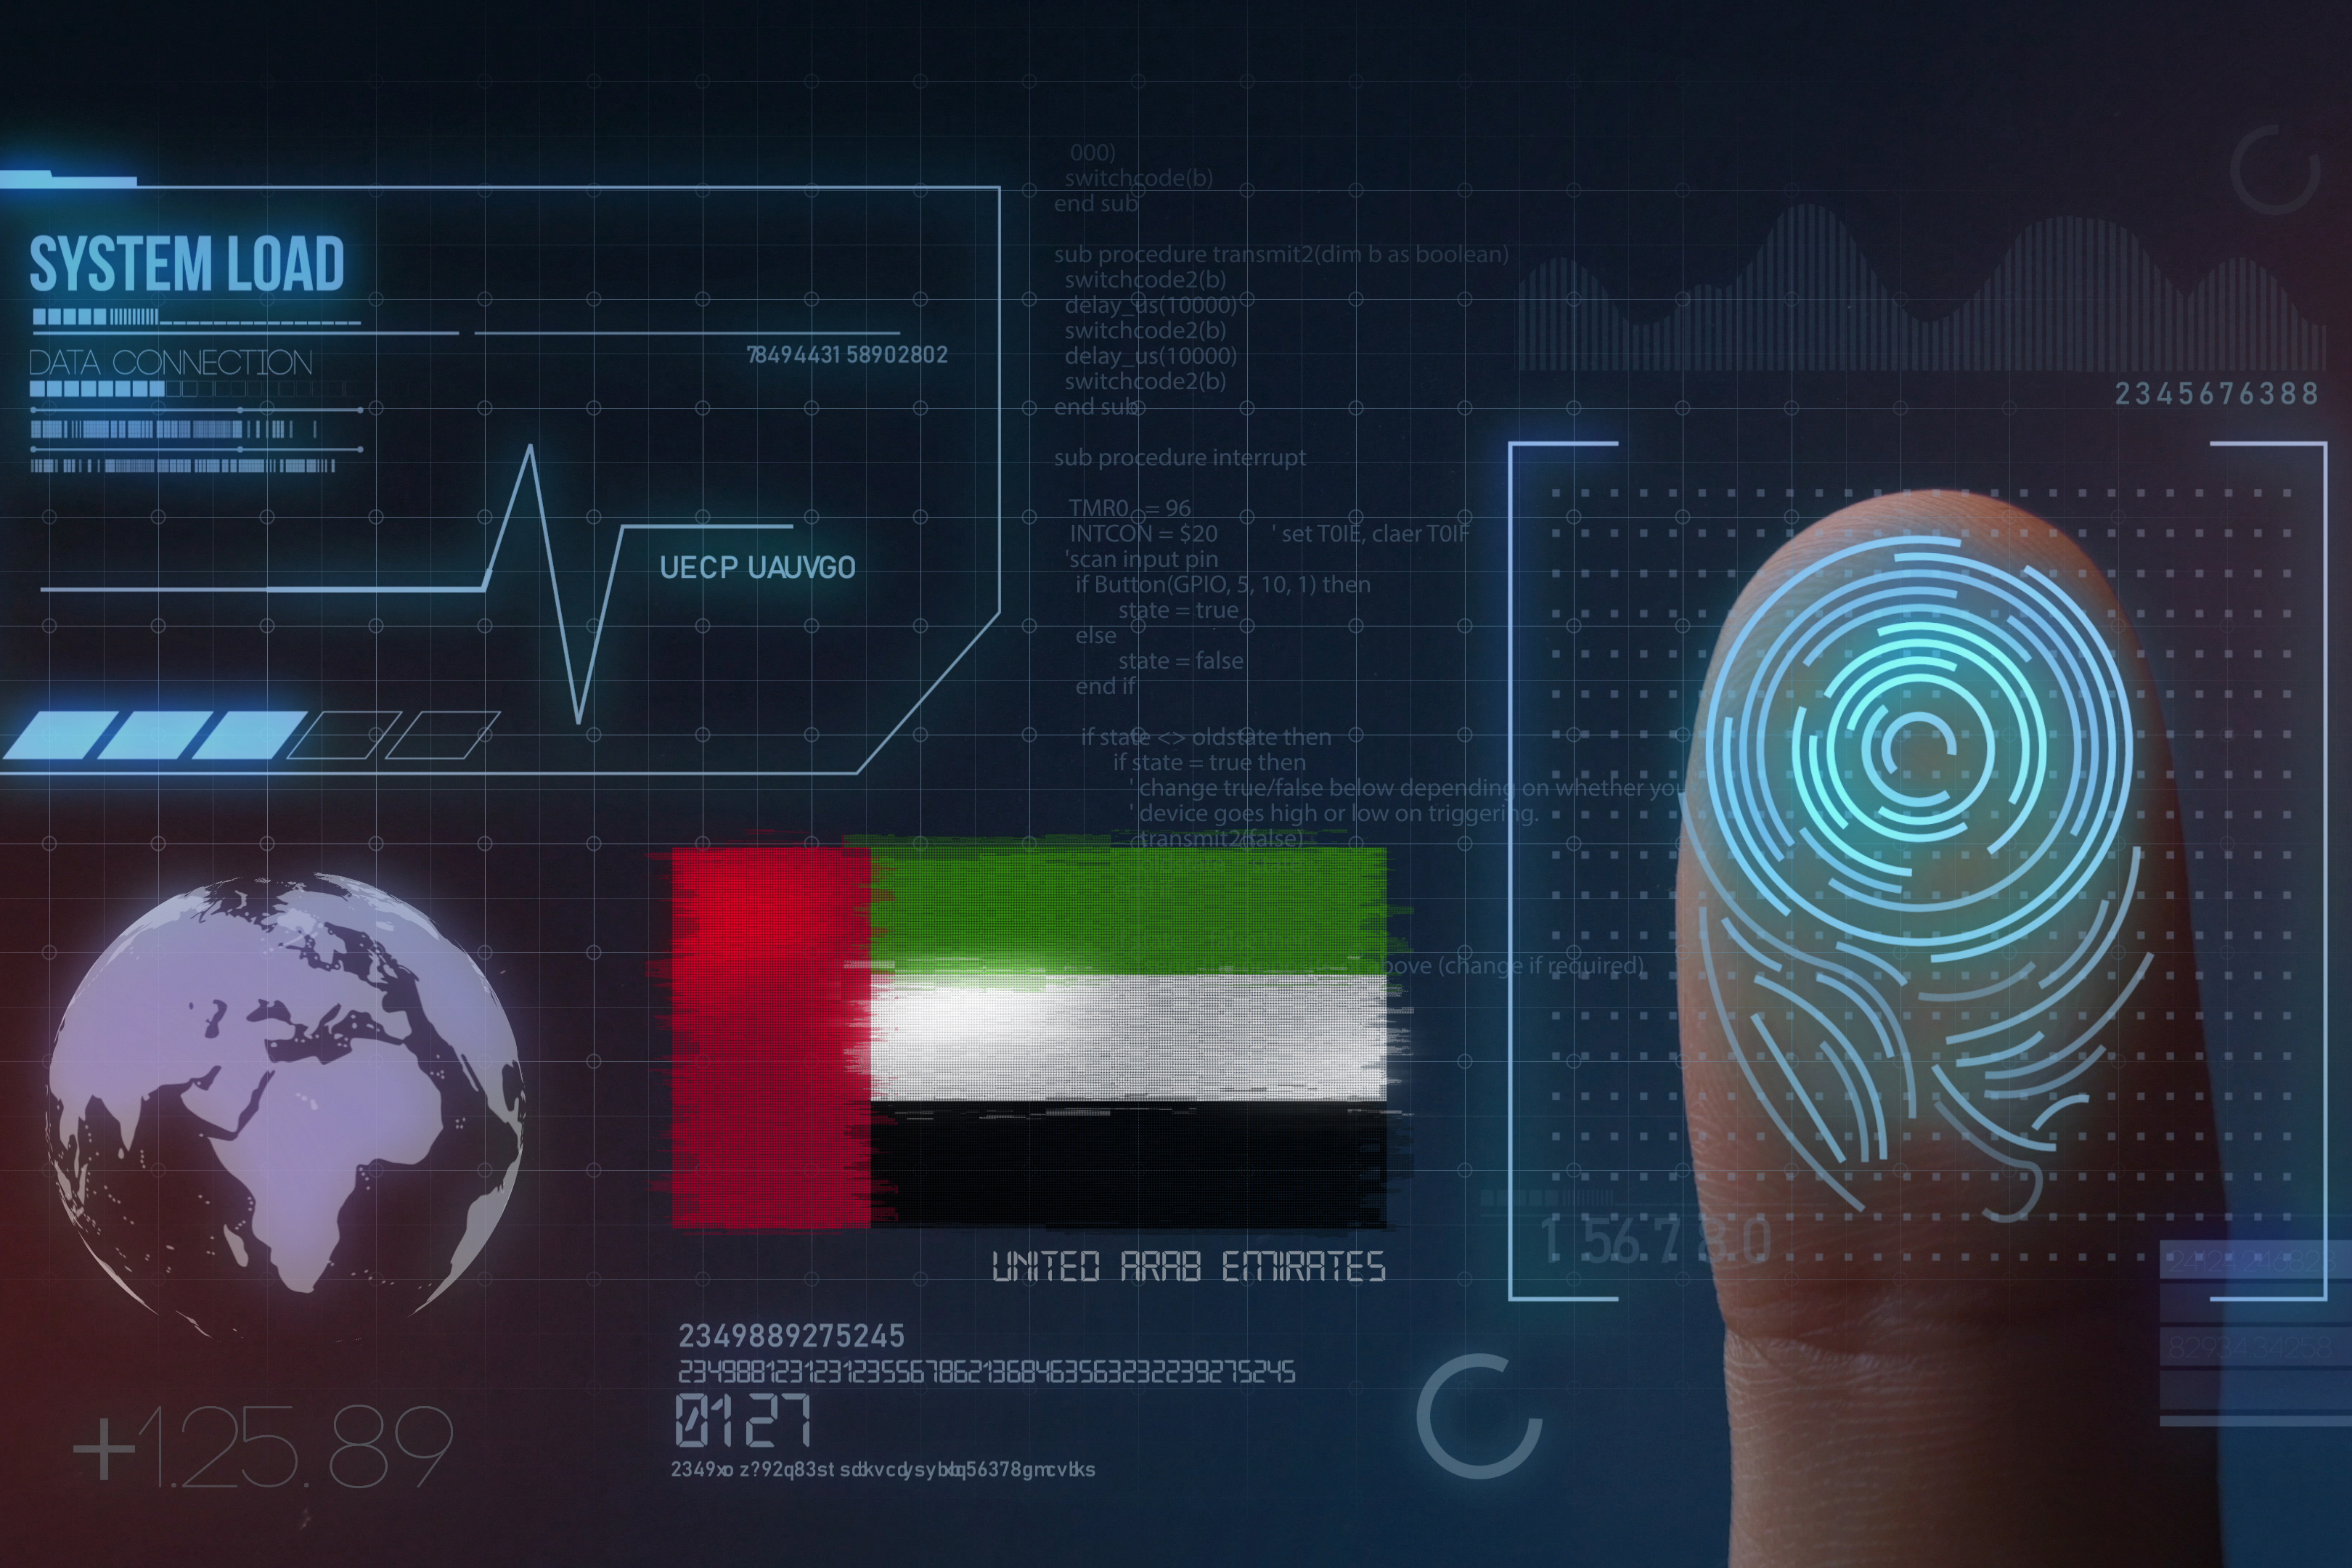 Surrender of biometric data for Emirates ID restoration